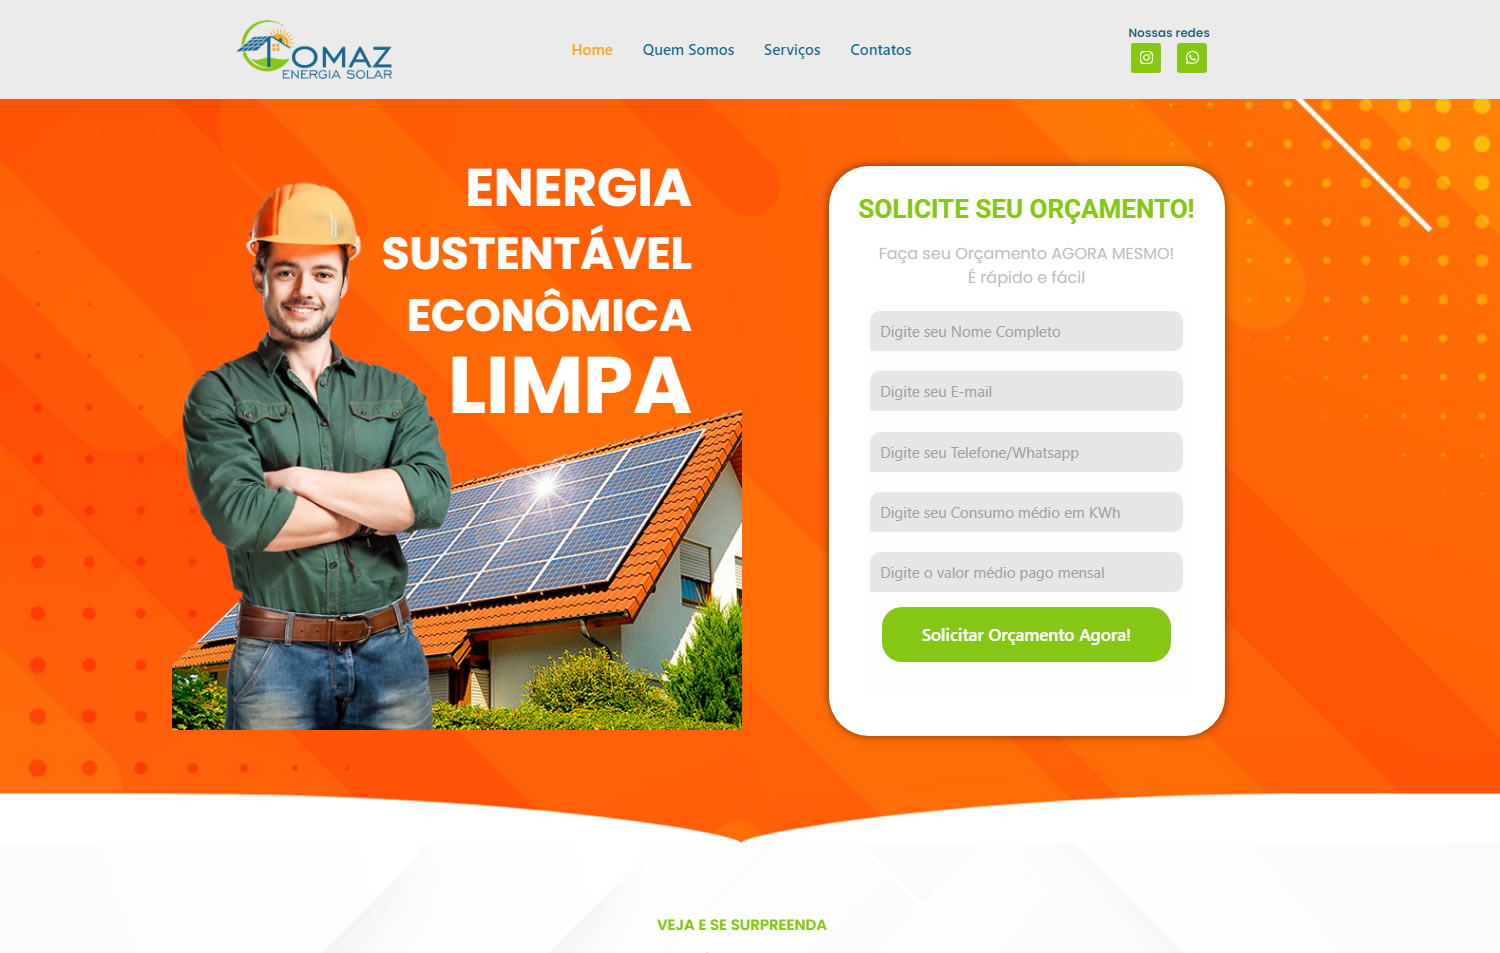 dtc_digital-thomaz-energia-solar